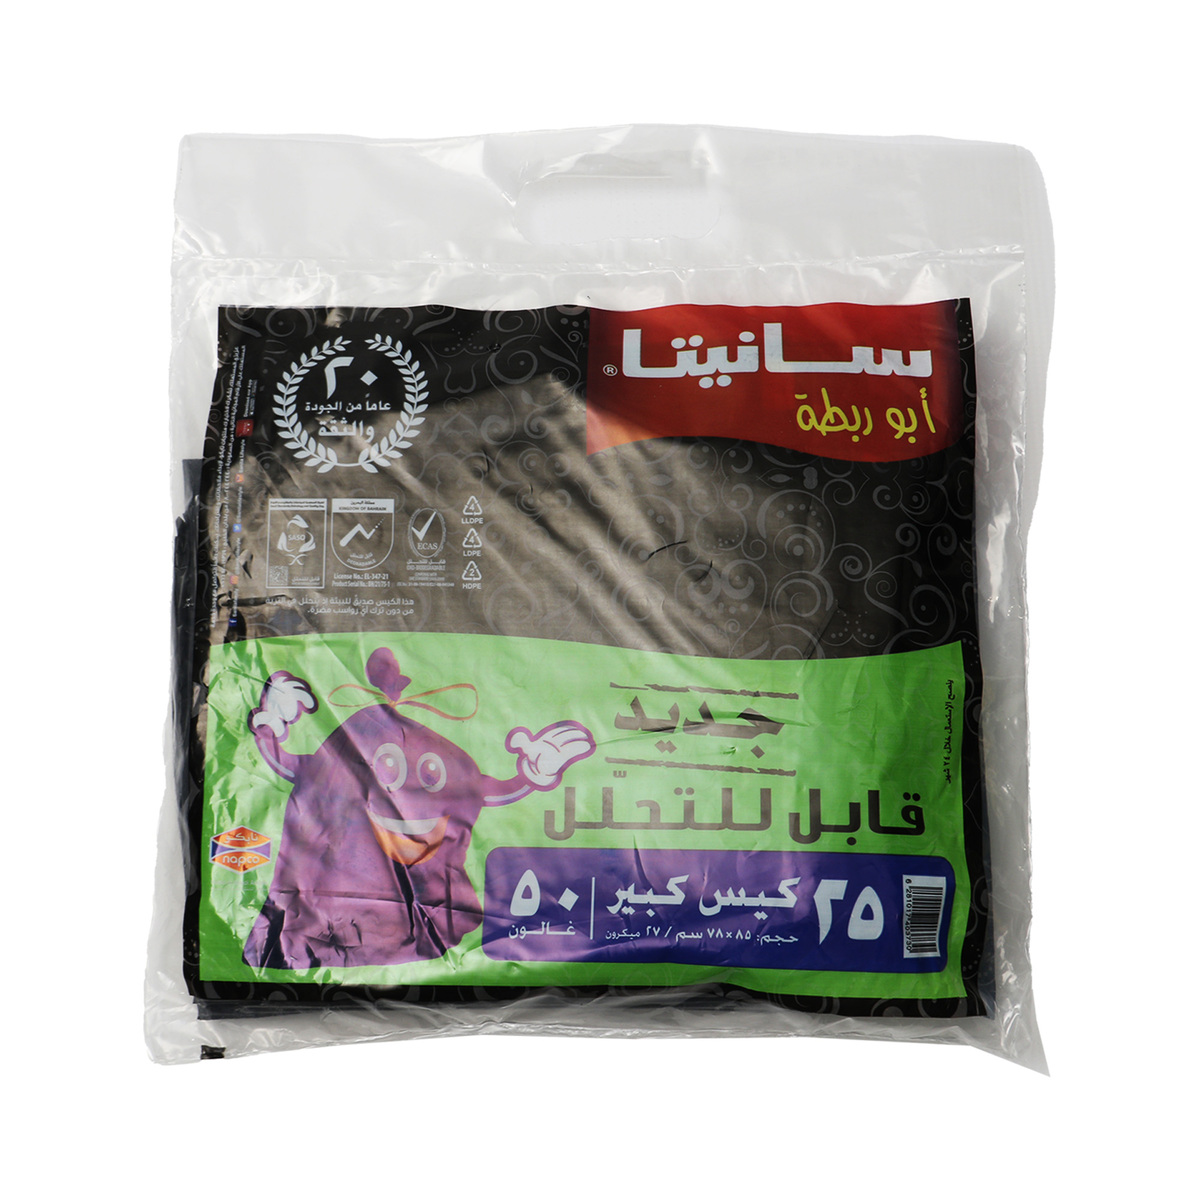 Sanita Tie Bag Biodegradable 50 Gallons 25pcs